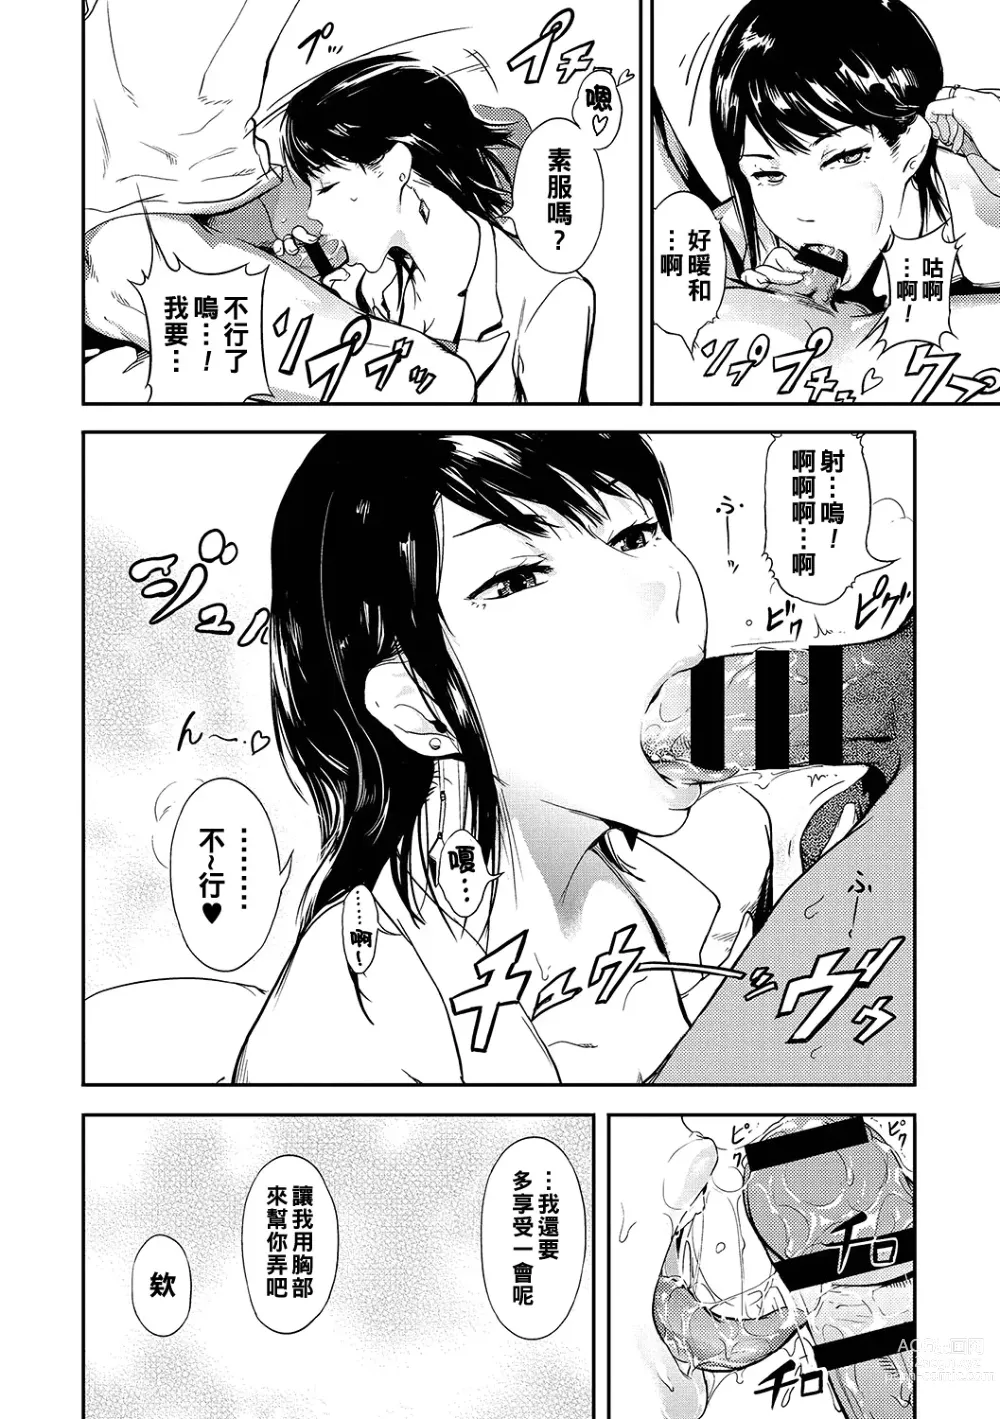 Page 6 of manga FRIDAY NIGHT FEVER